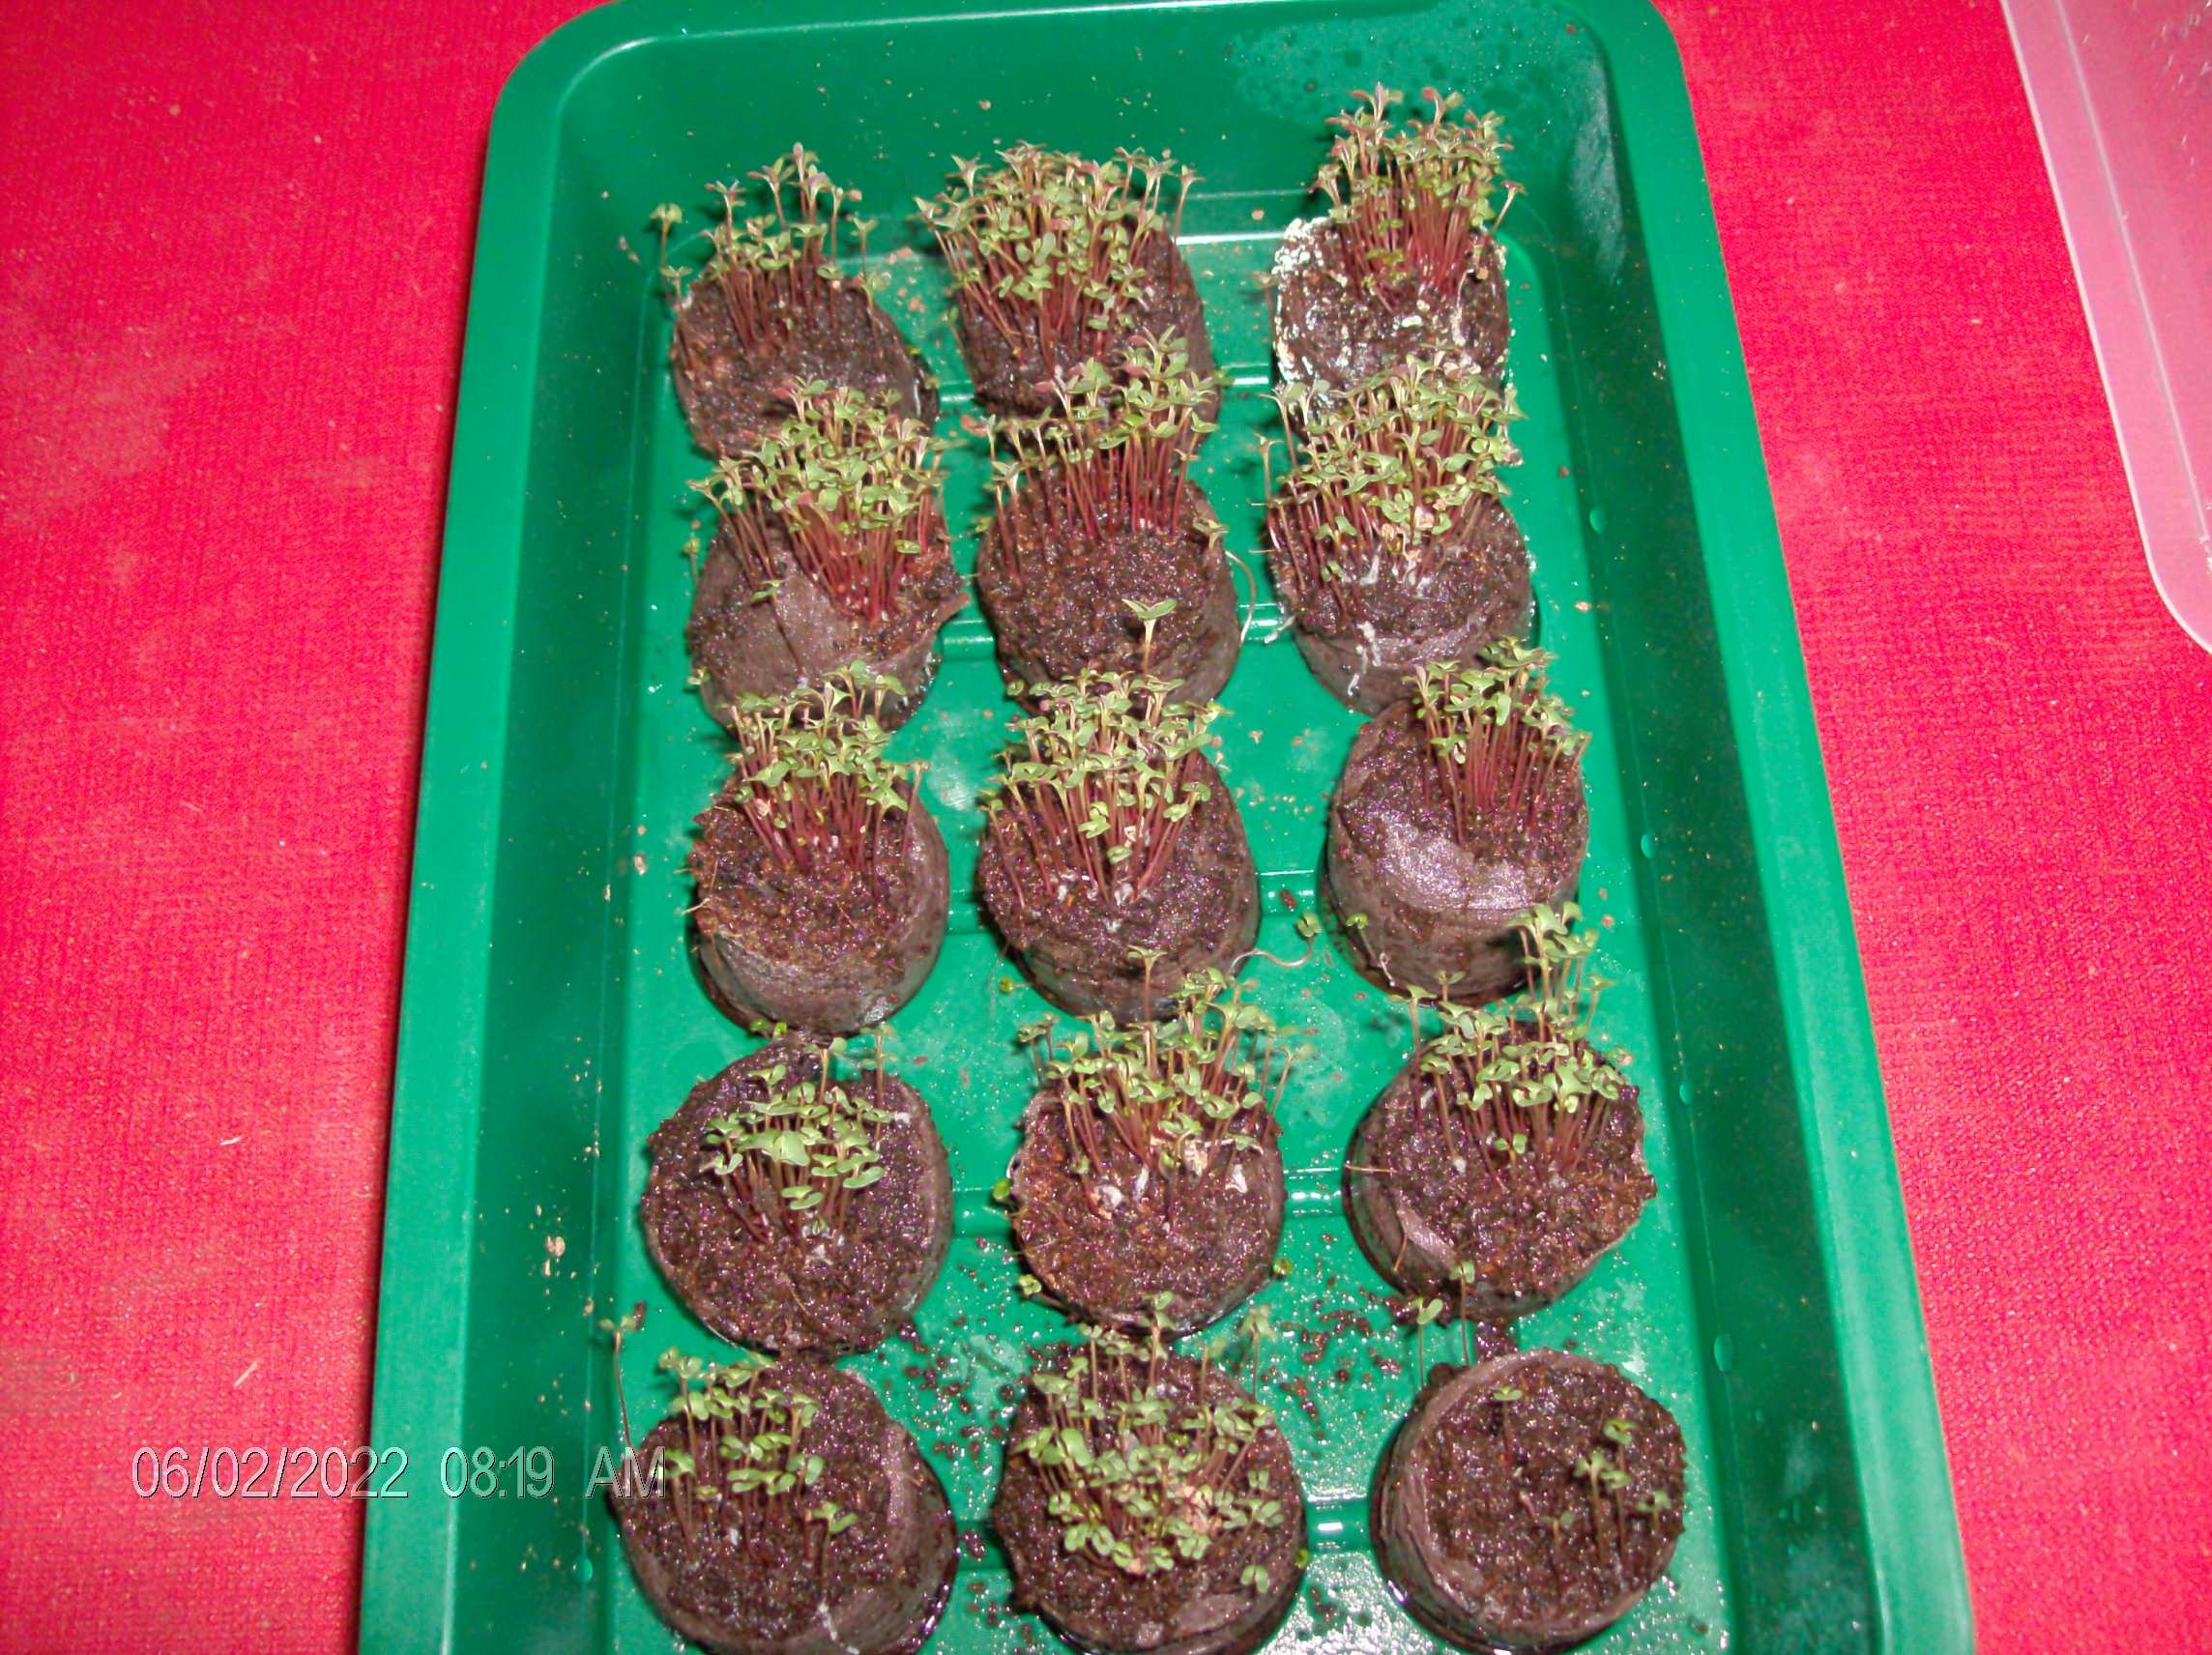 HPIM2071 mini greenhouse with germinated seeds of E. cinerea.JPG